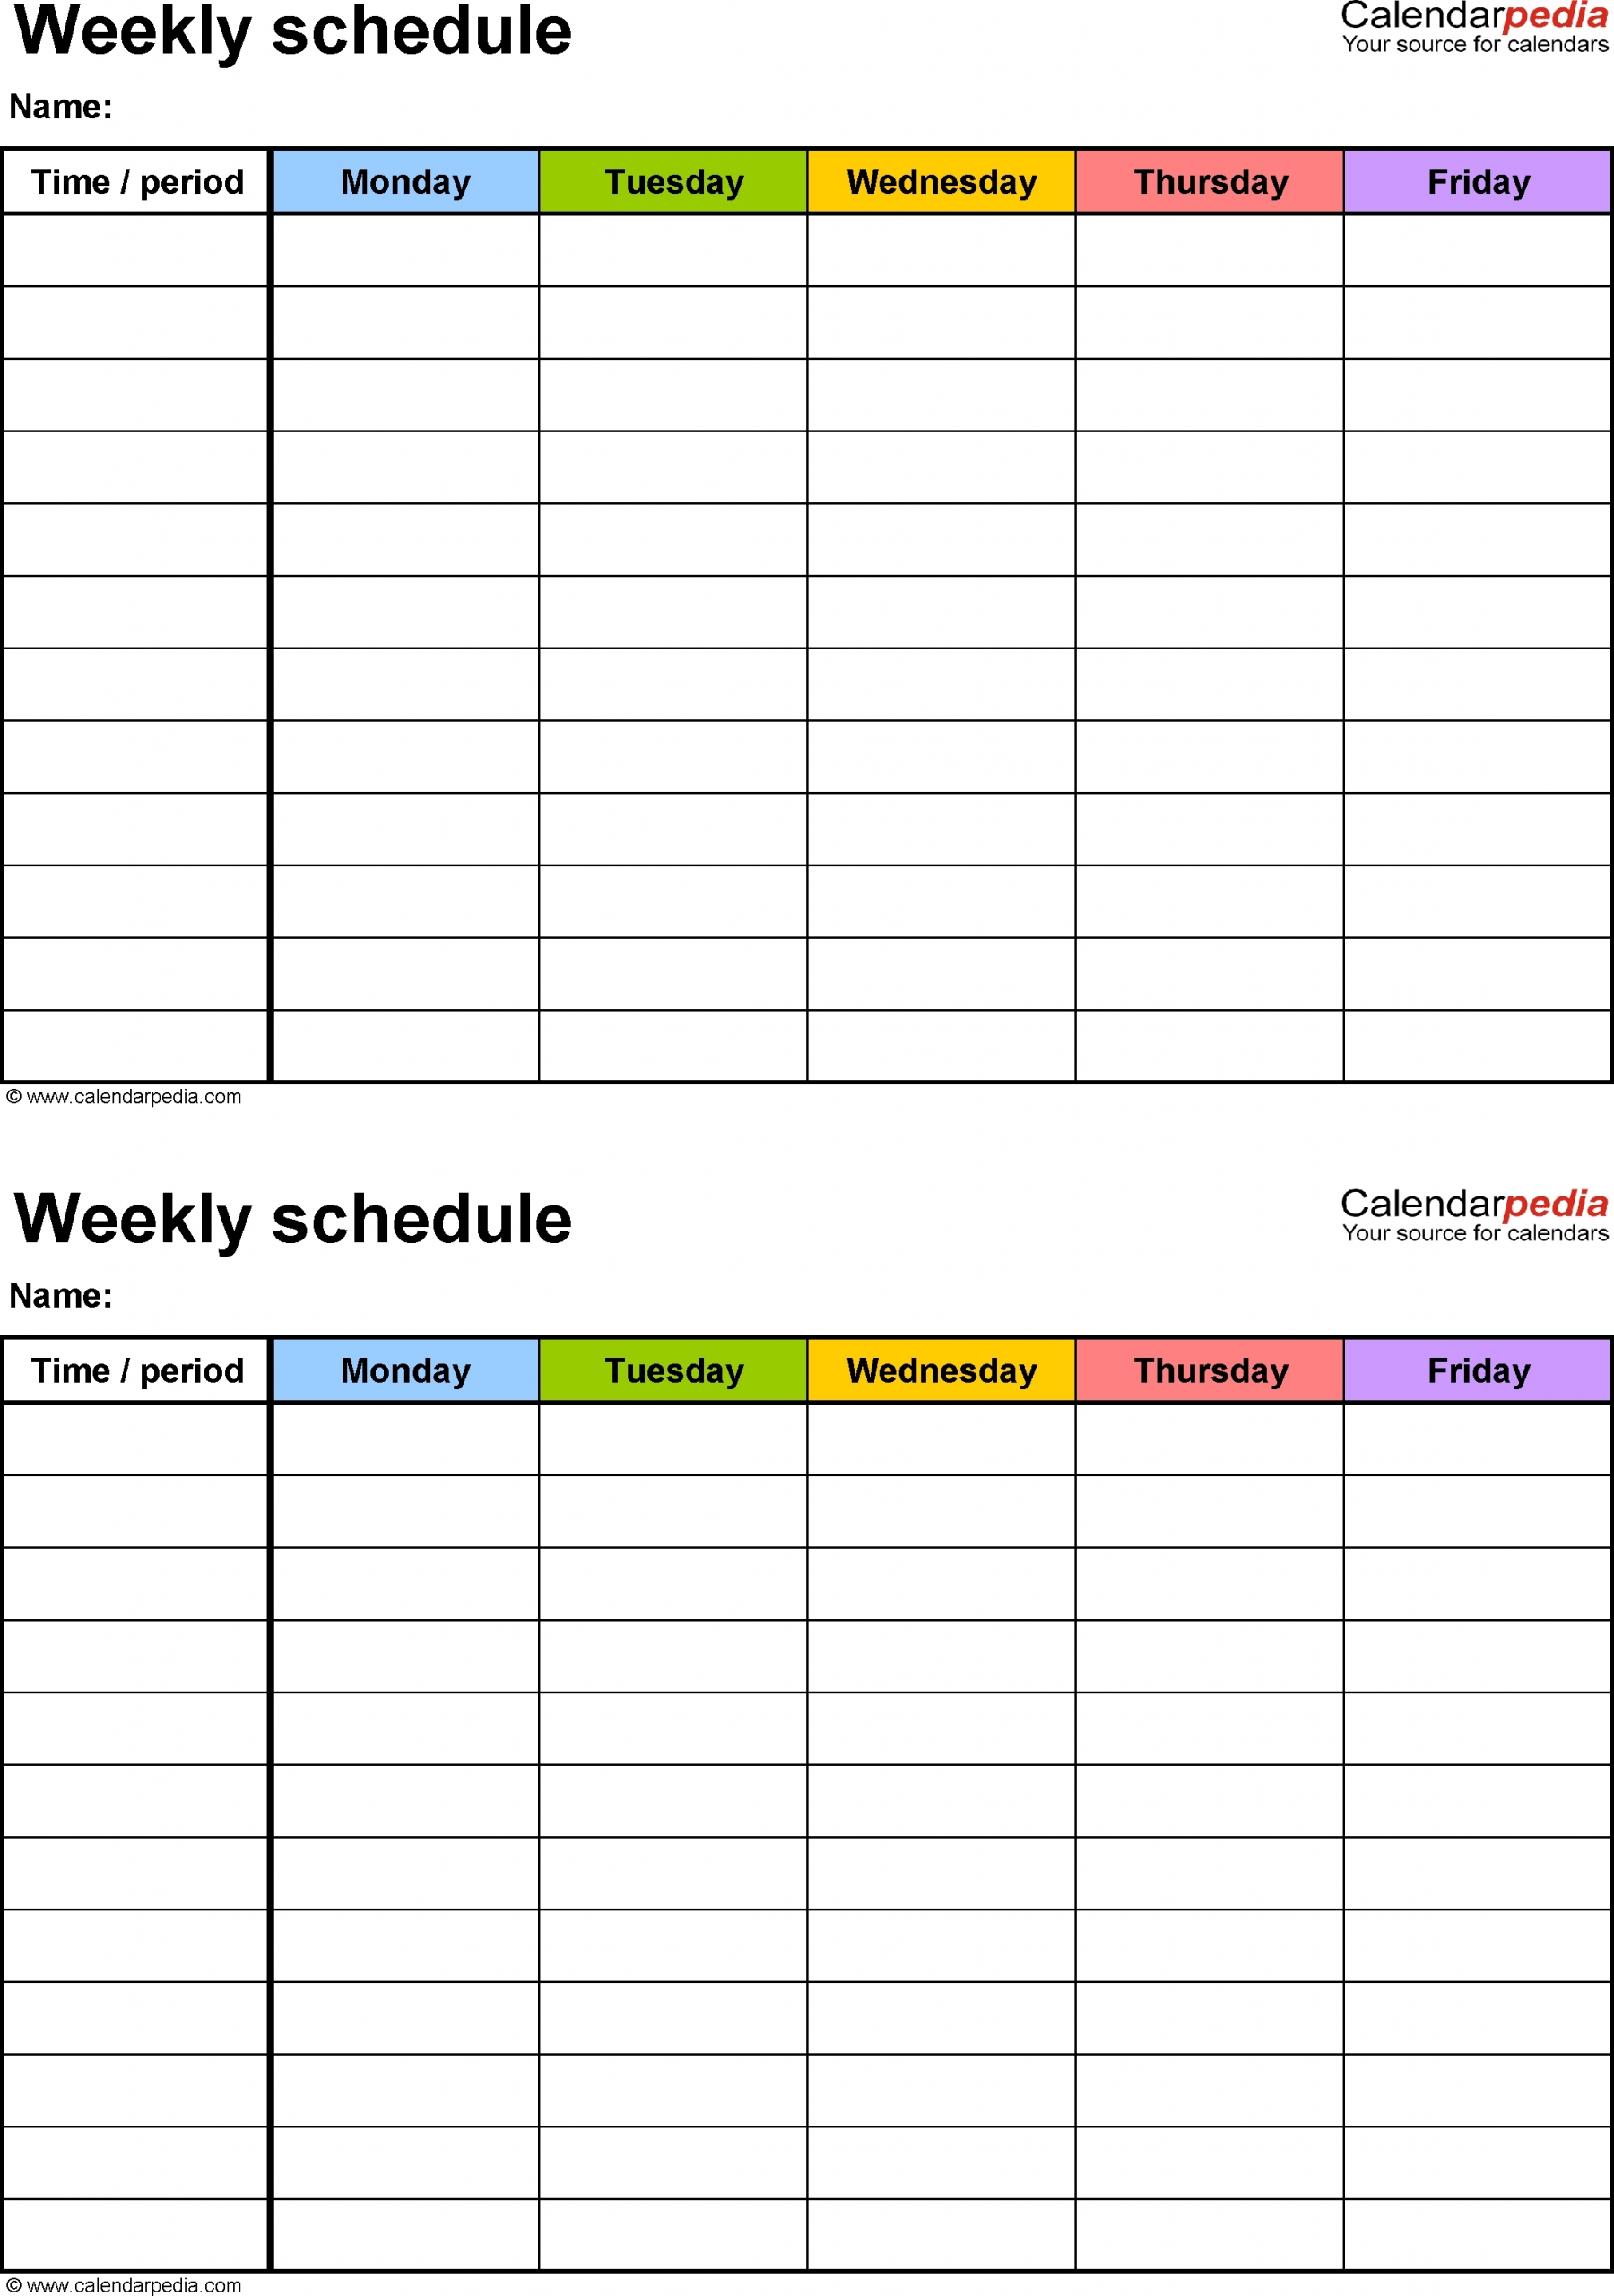 printable weekly calendar with 15 minute time slots